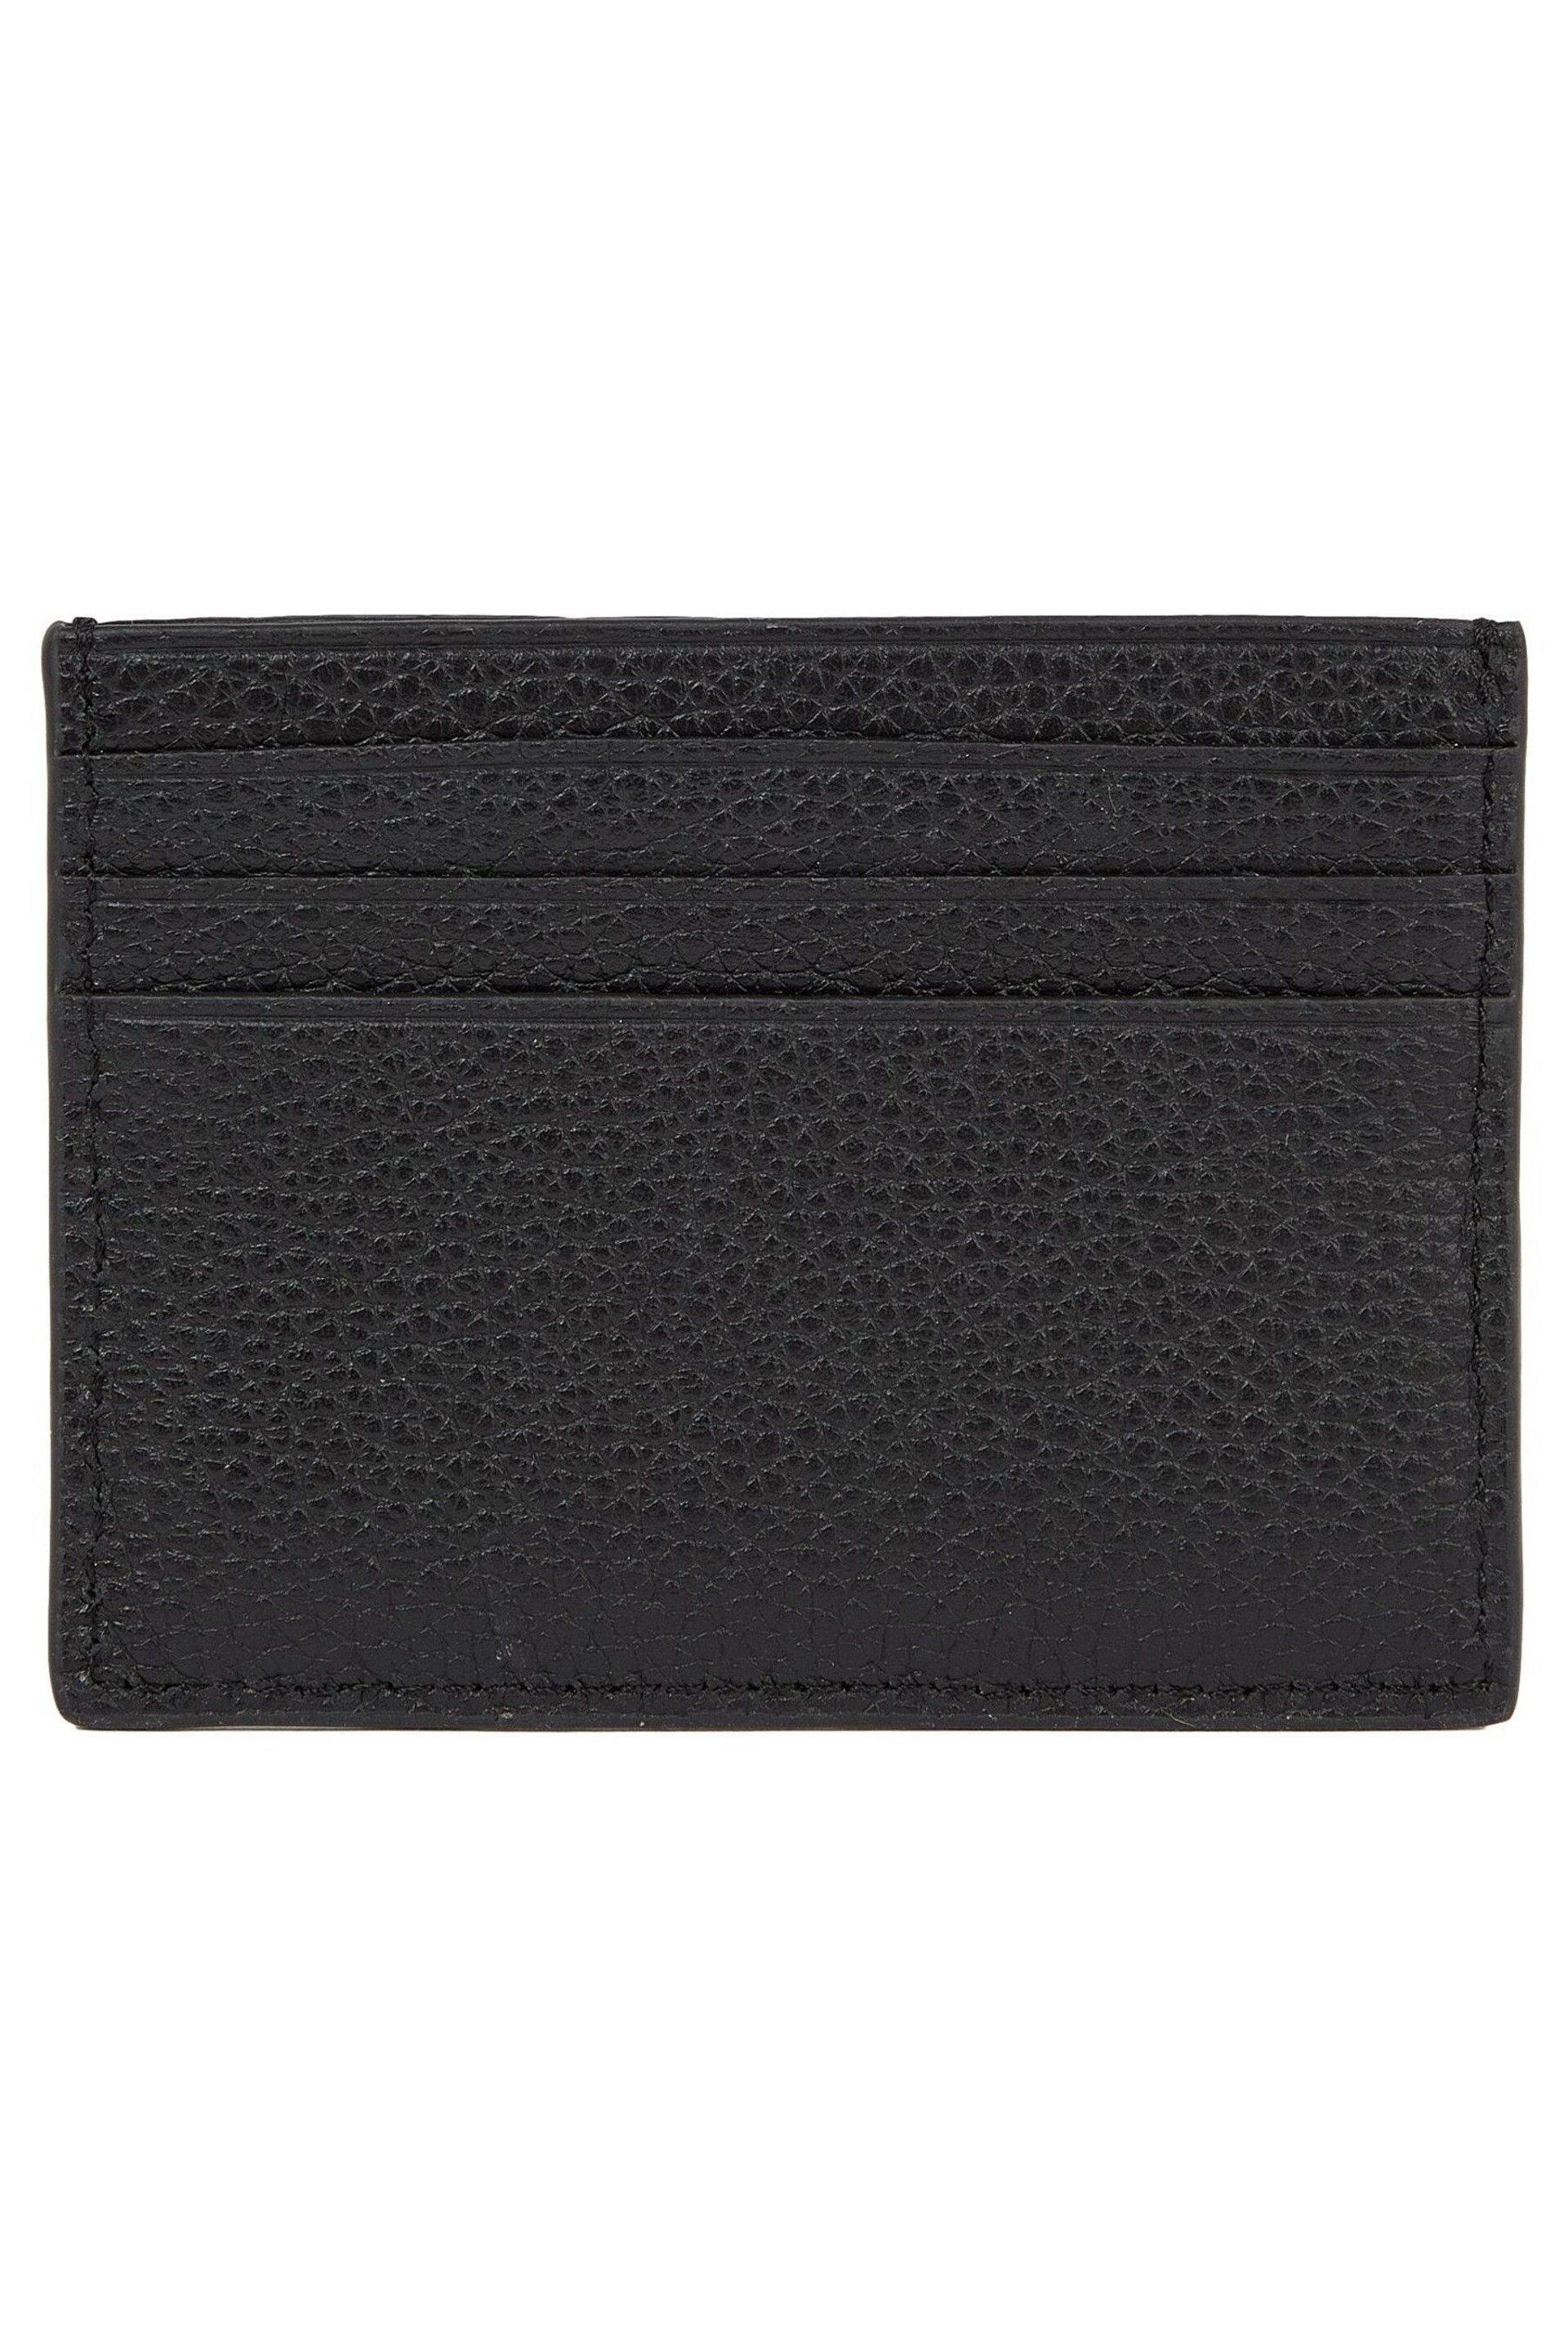 Calvin Klein Black Warmth Leather Card Holder - Image 2 of 3